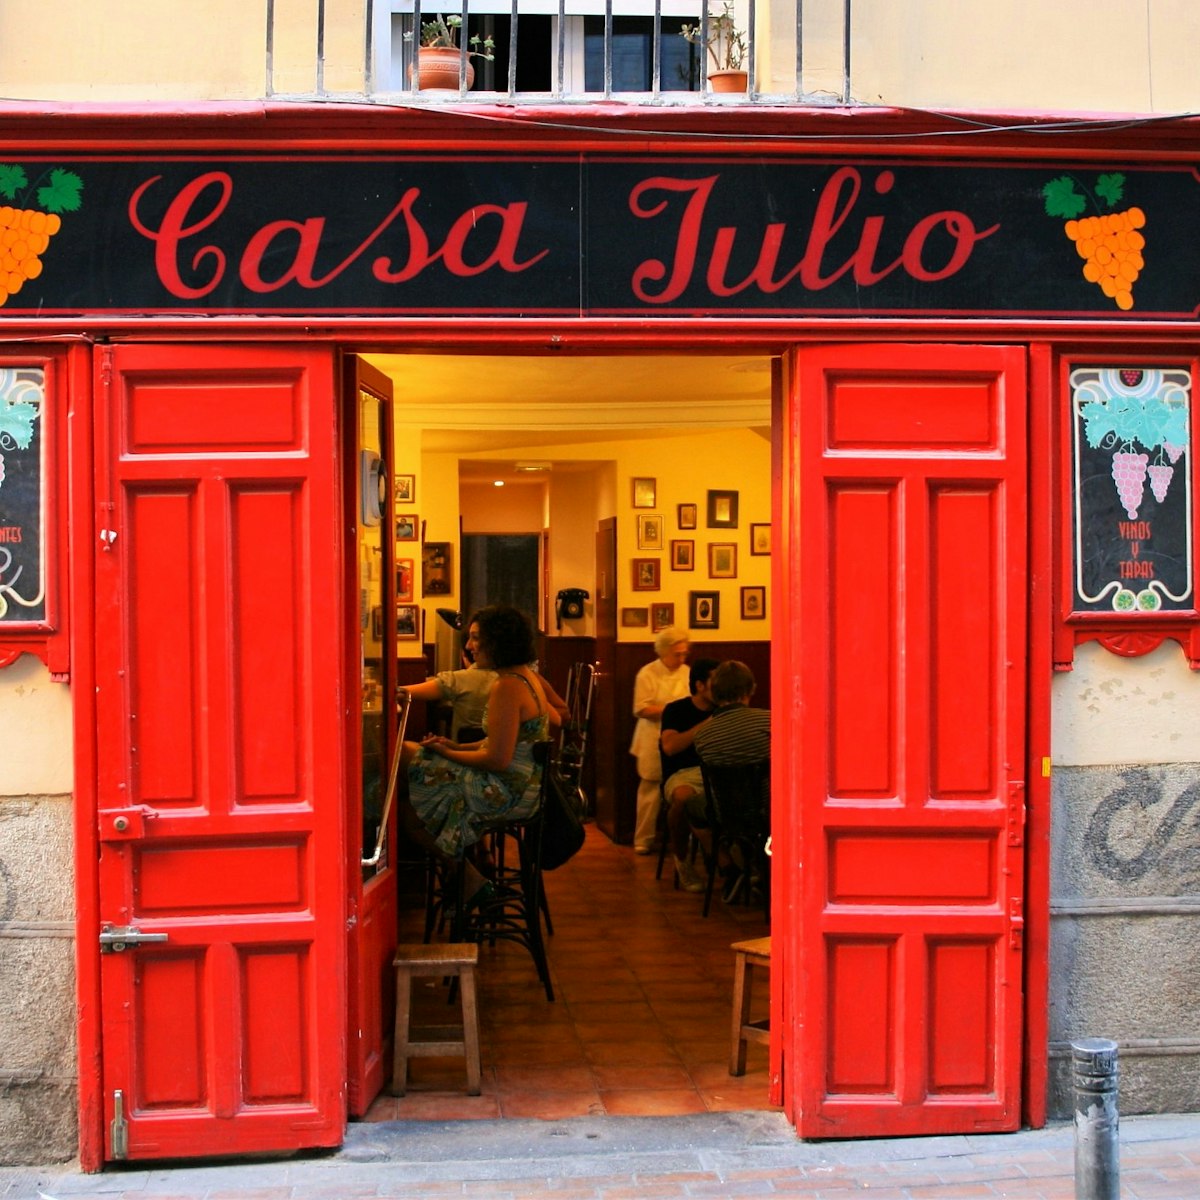 Casa Julio in Madrid
Flickr Creative Commons: https://www.flickr.com/photos/jafsegal/3774829055